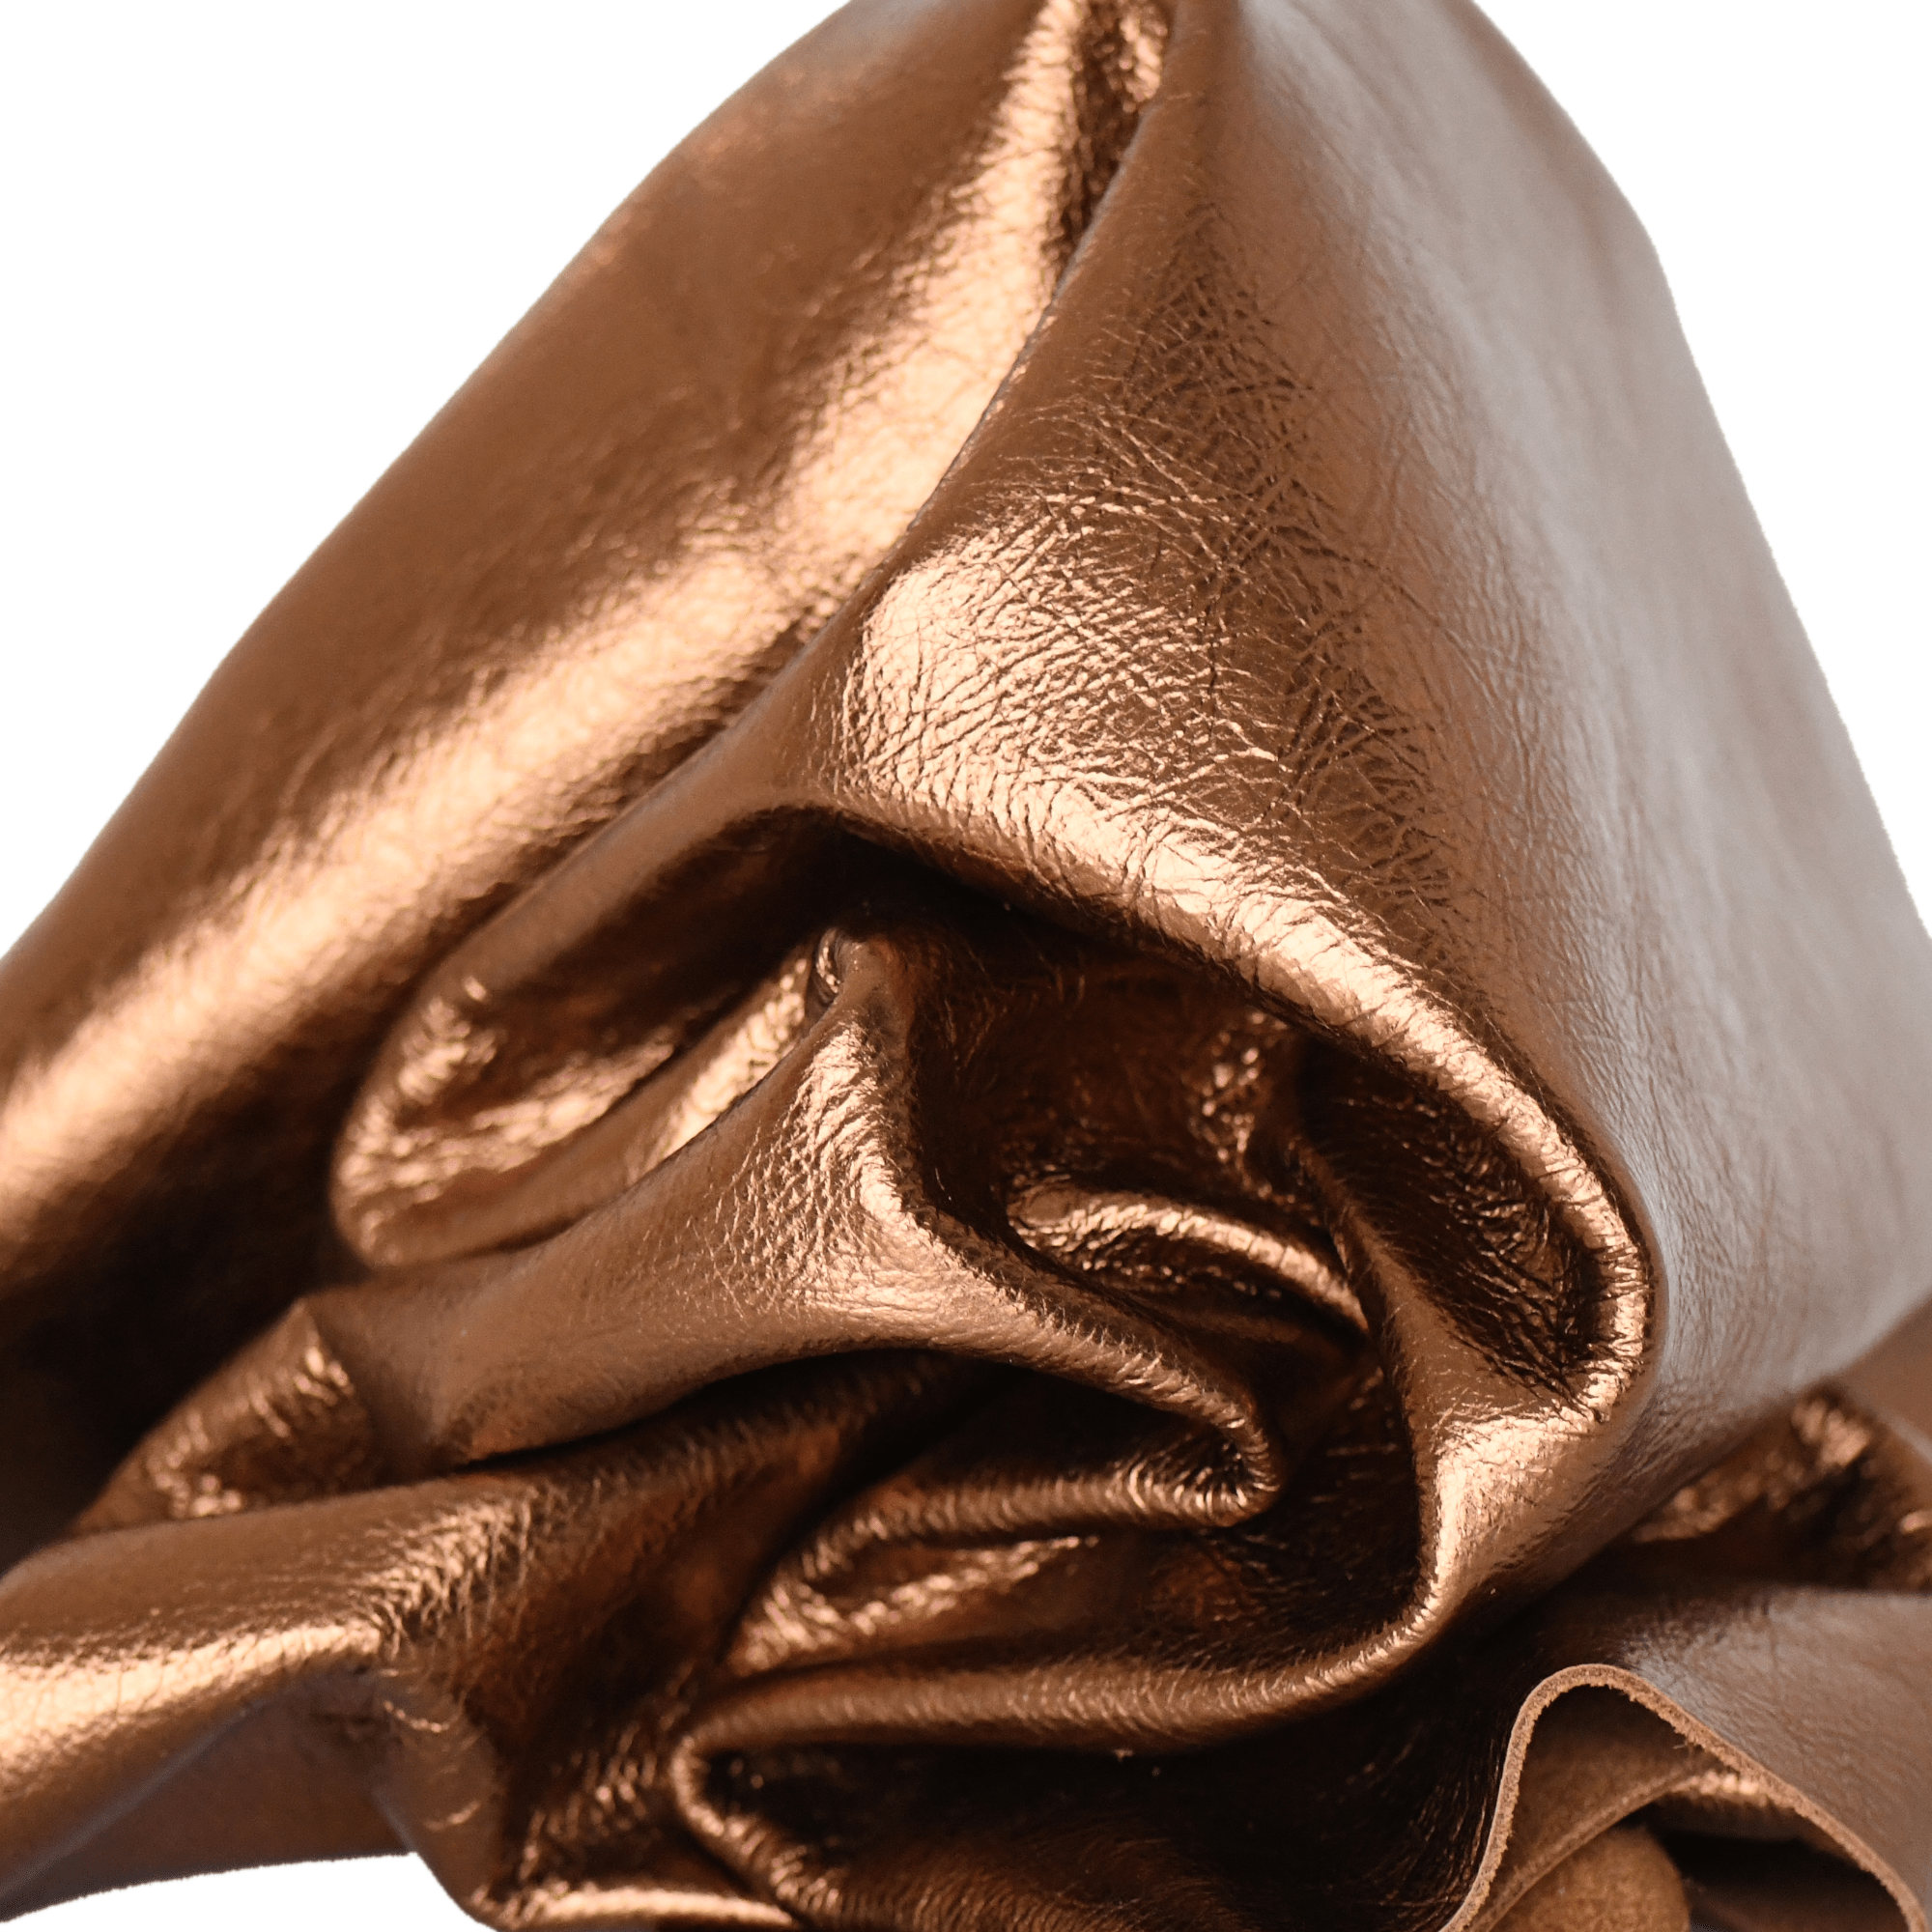 Bronze Metallic Leather Strips – US CRAFTHOUSE